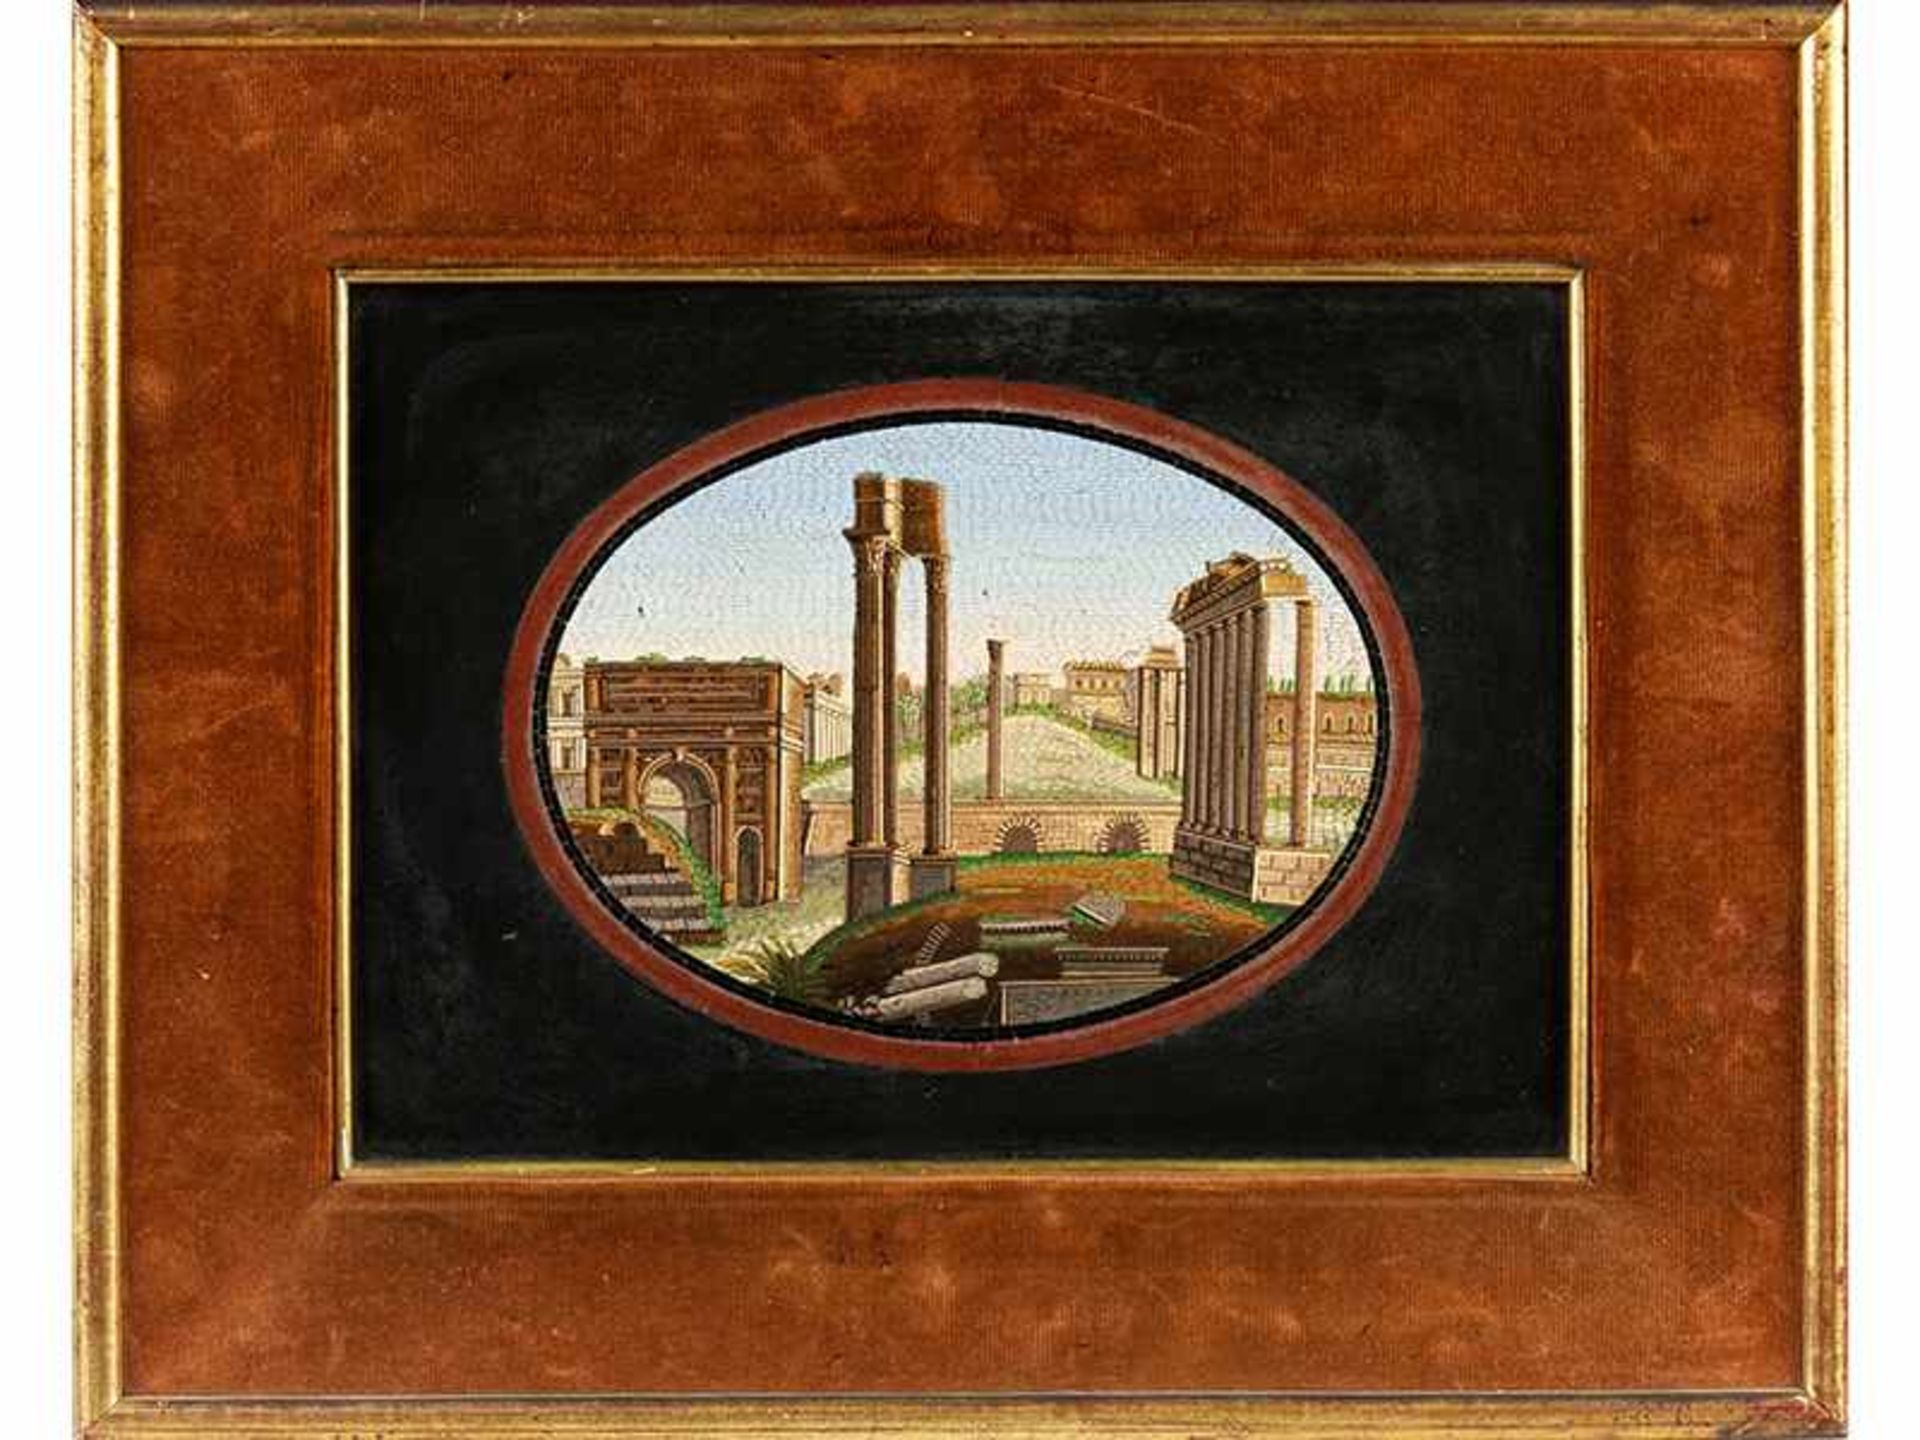 Grand Tour-Objekt 19 x 25 cm. Rahmenaußenmaß: 30 x 36 cm. Italien, 19. Jahrhundert. Das Objekt in